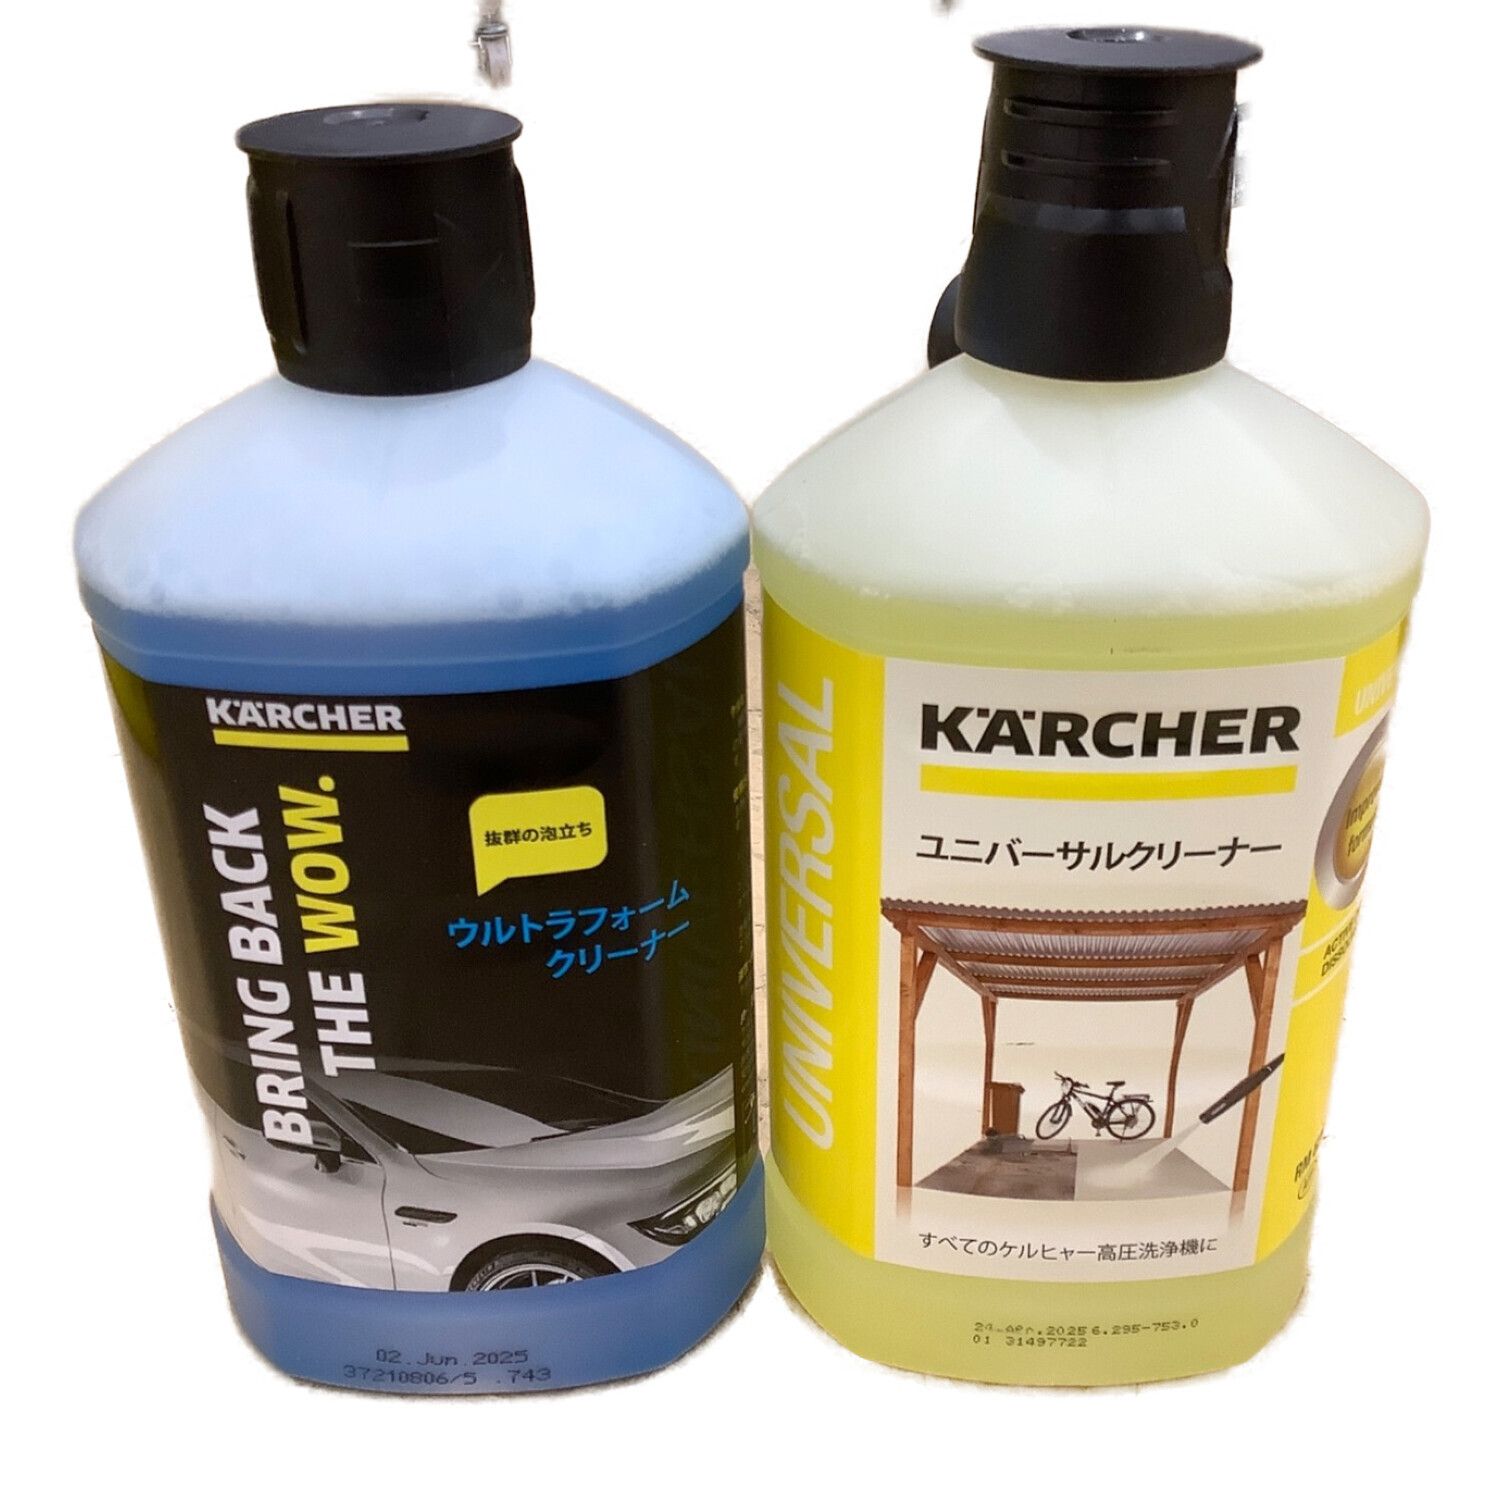 Karcher (ケルヒャー) 高圧洗浄クリーナー JTK サイレントS ...